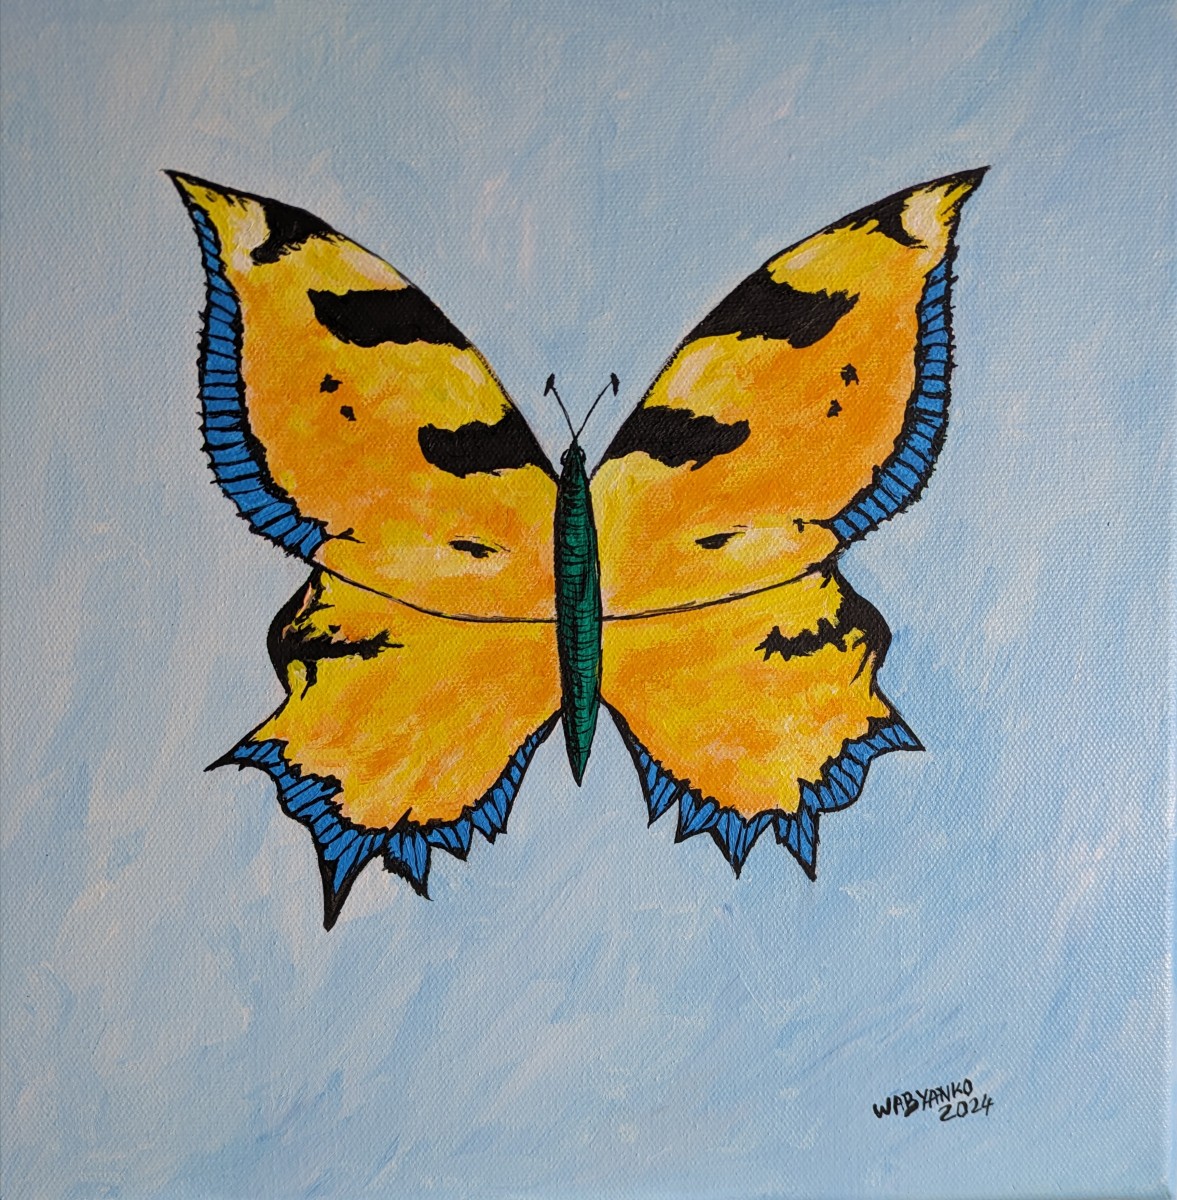 Papillon petite tortue, de Wabyanko . The Art Cycle